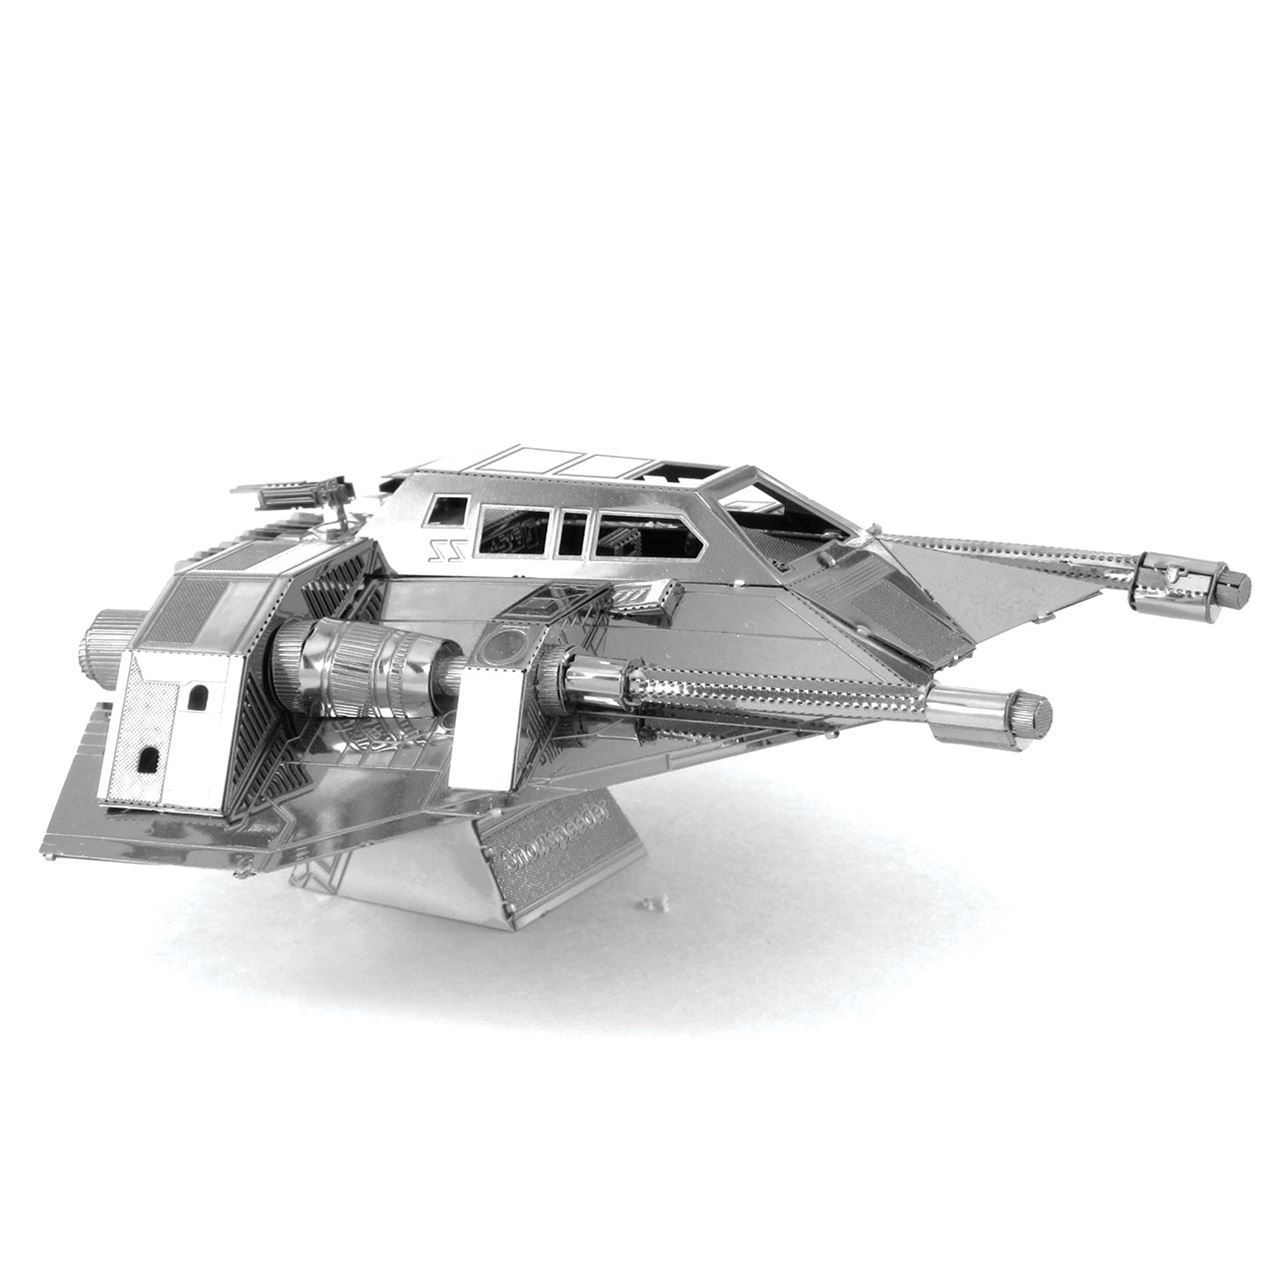 Star Wars First Order Snowspeeder 3D Puzzle Metall Modell Laser Cut Bausatz 